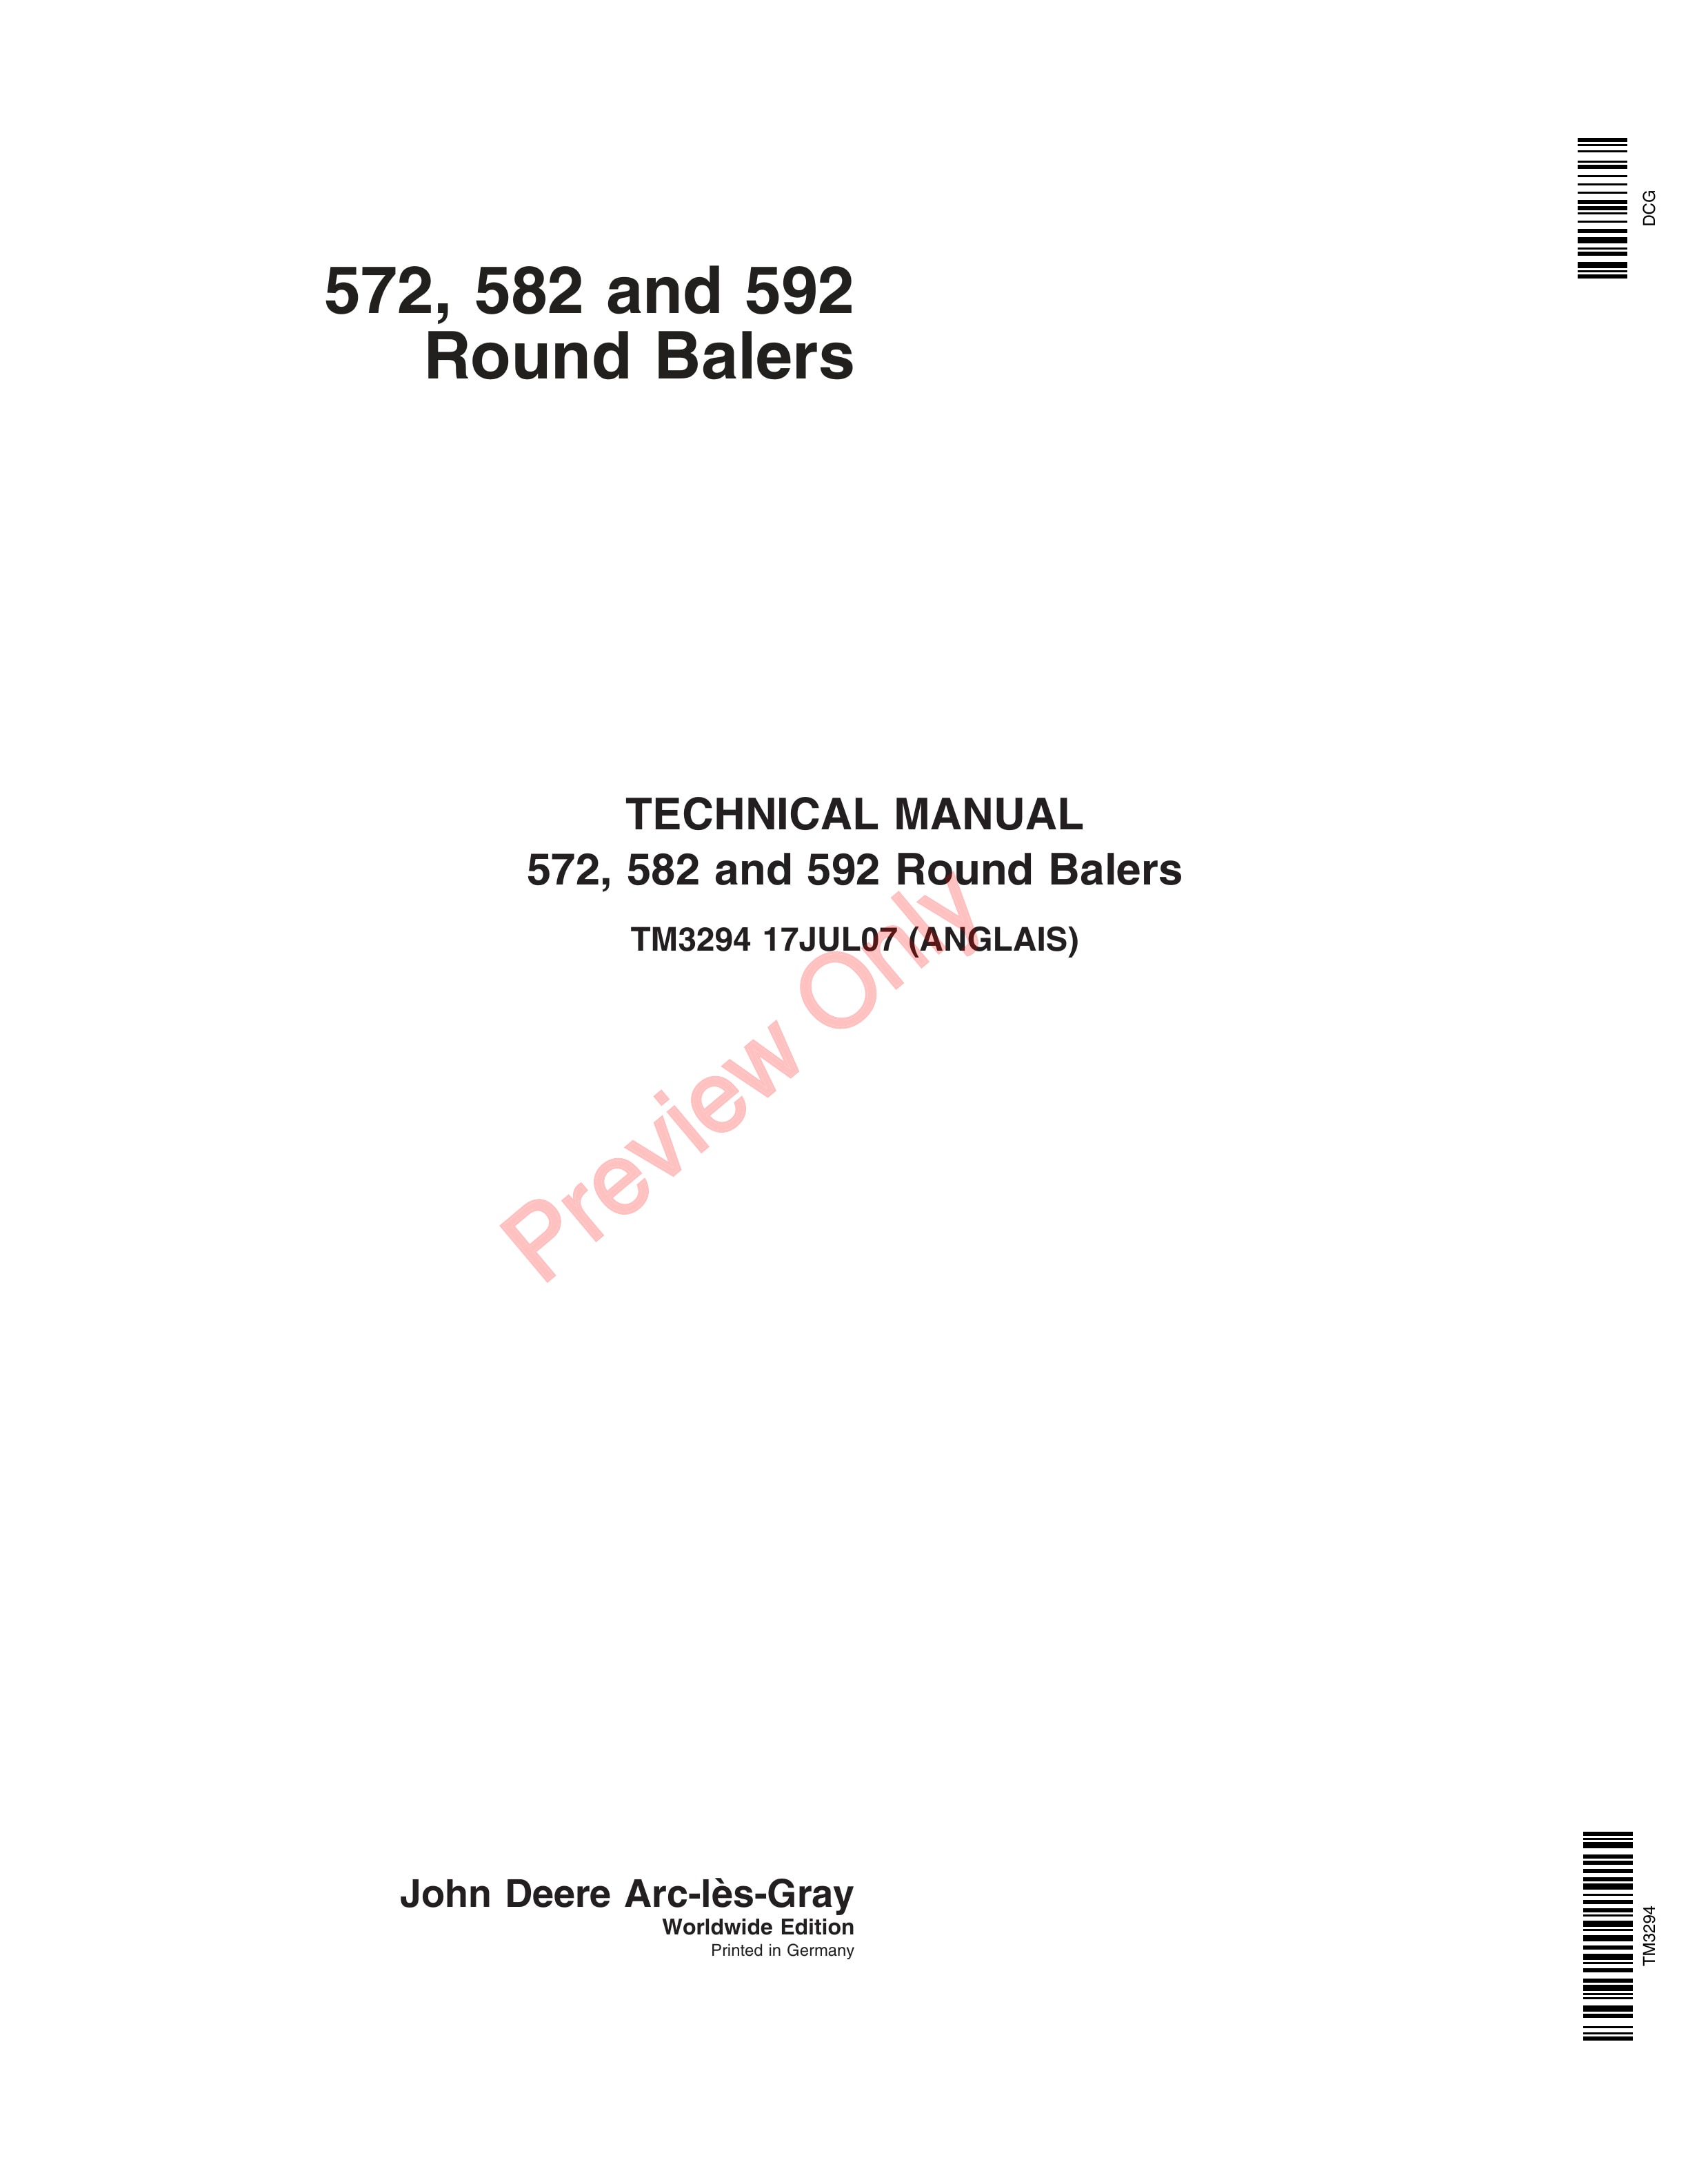 John Deere 572, 582, 592 Round Baler Technical Manual TM3294 17JUL07 PDF